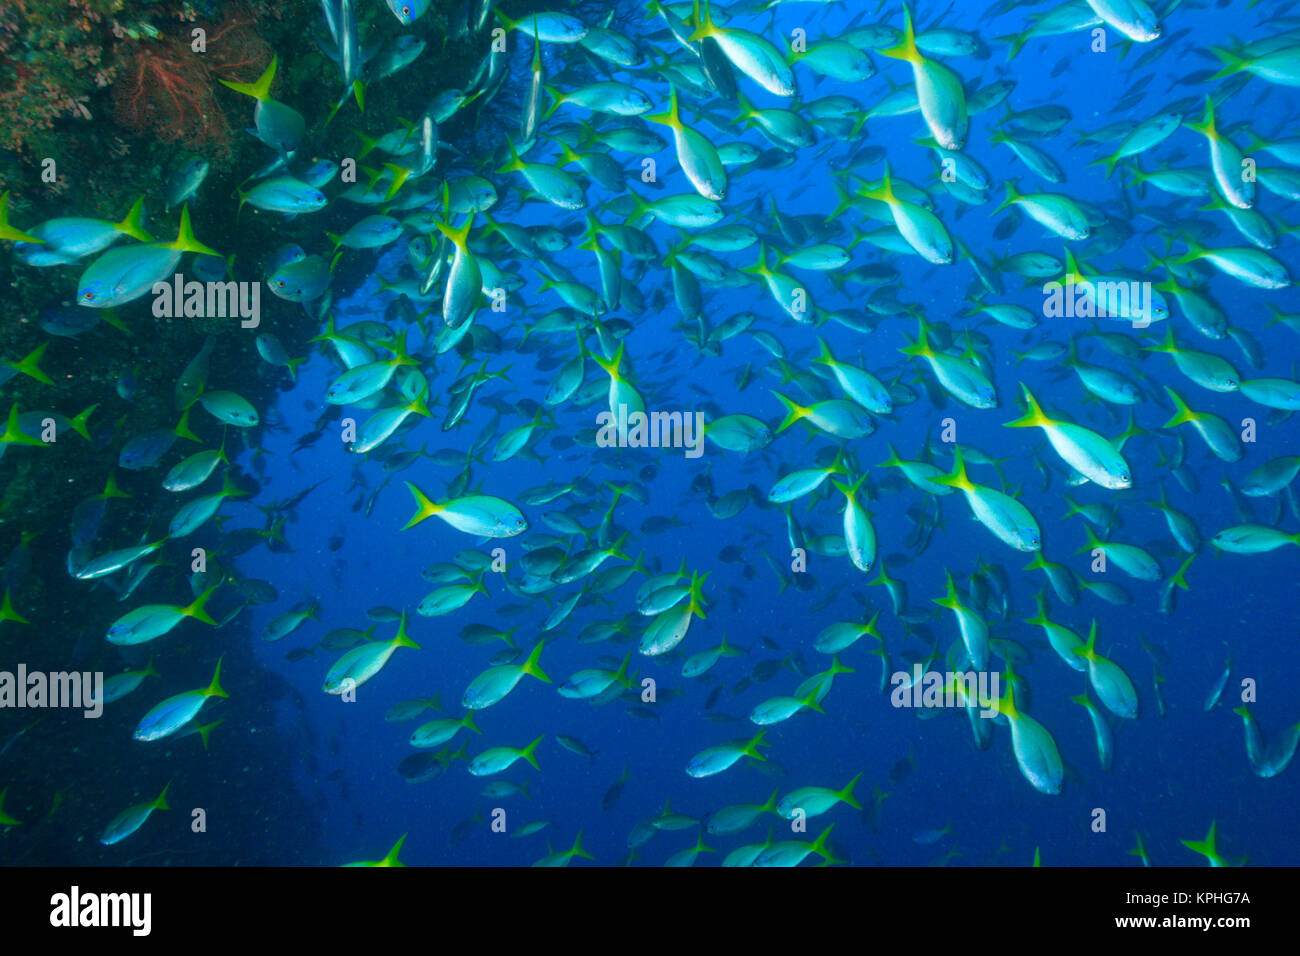 schooling fish, fusiliers, Raja Ampat region of Papua (formerly Irian Jaya) Stock Photo